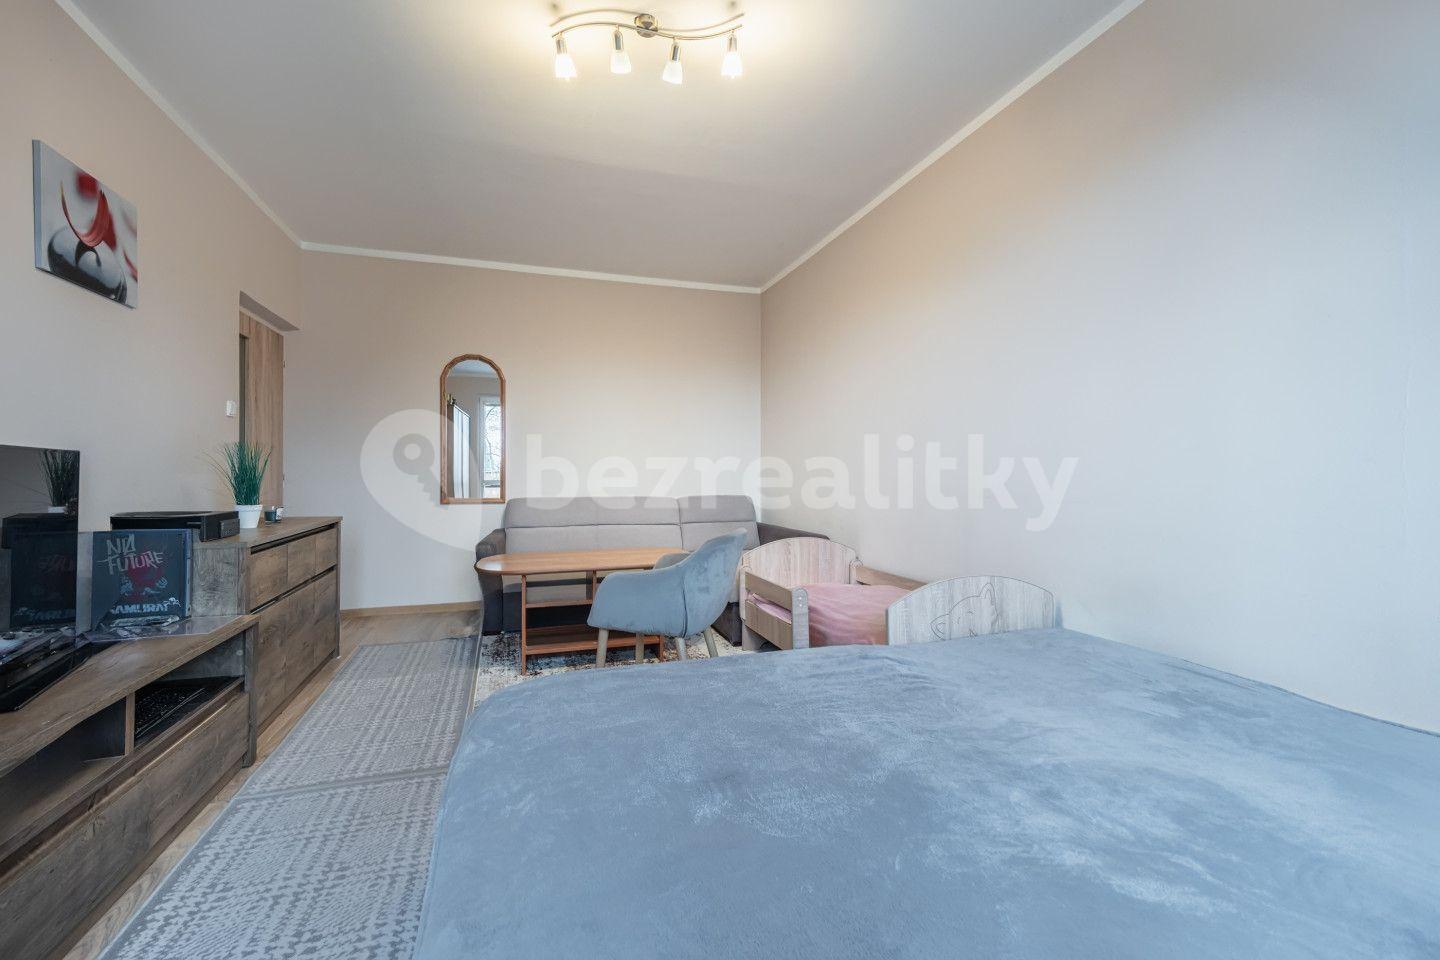 2 bedroom flat for sale, 52 m², Václavská, Chomutov, Ústecký Region